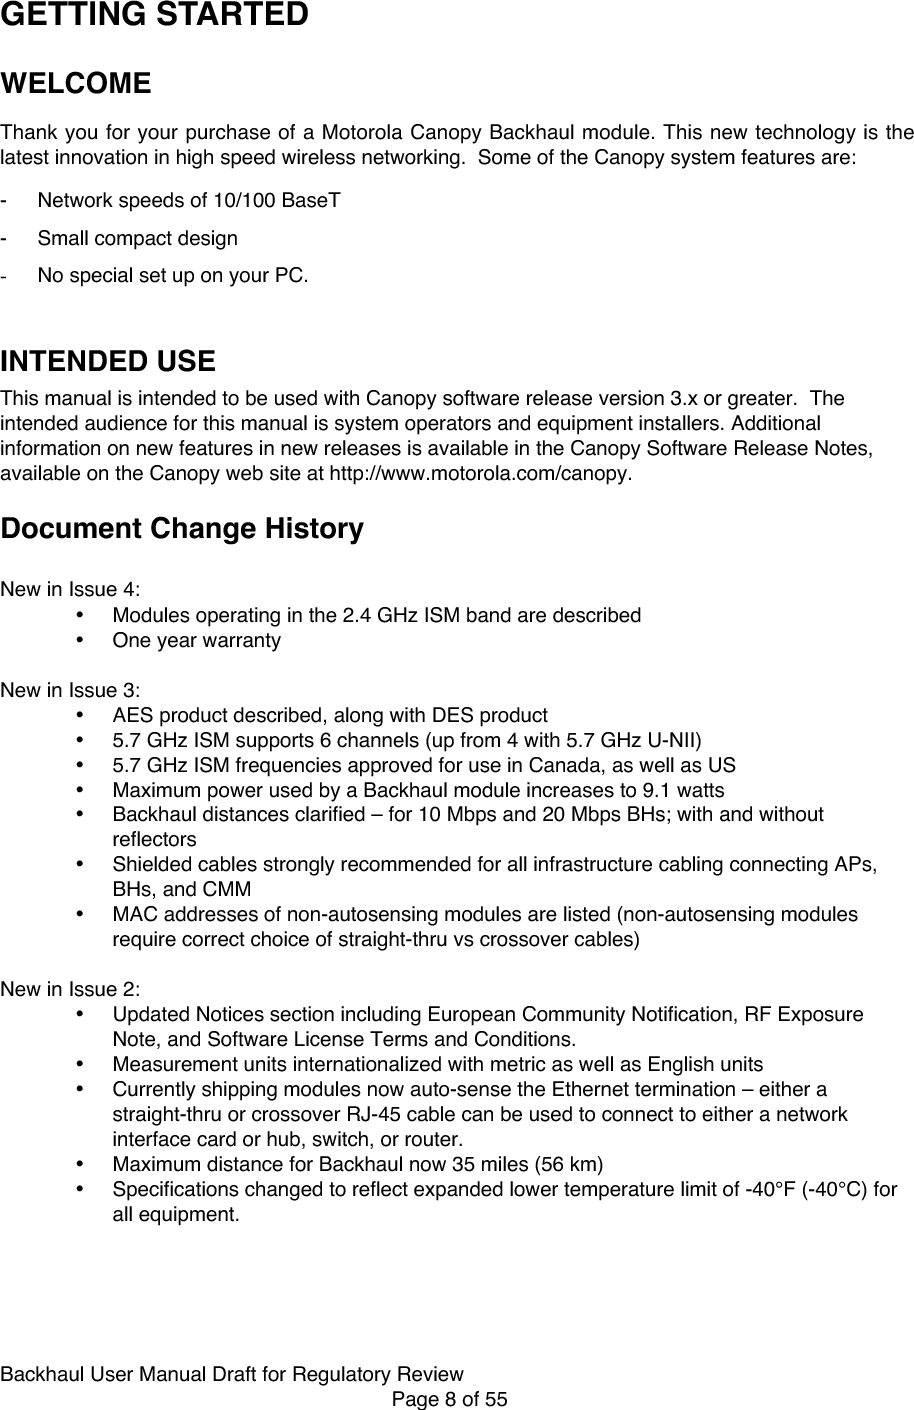 Backhaul User Manual Draft for Regulatory ReviewPage 9 of 55